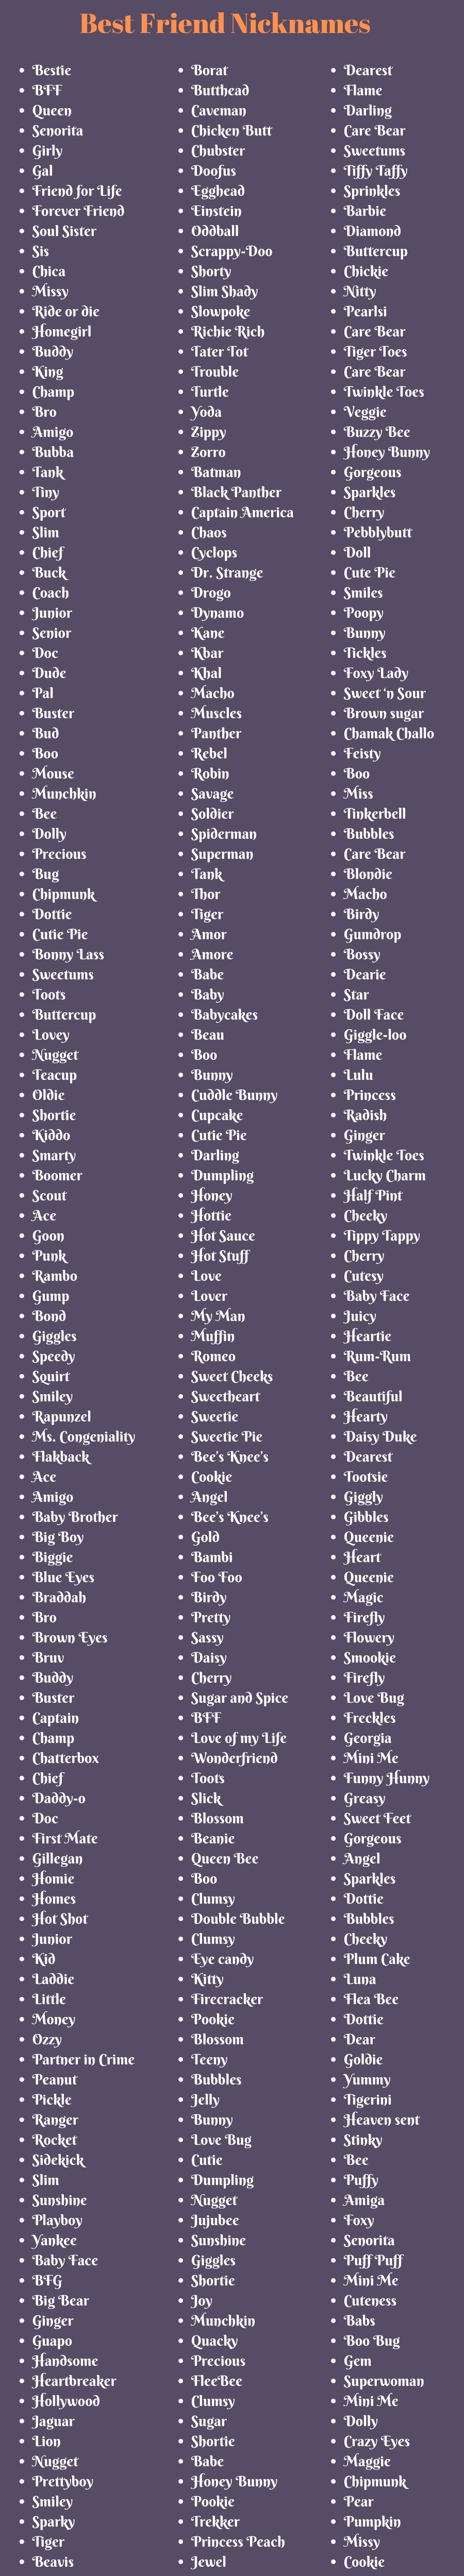 Beste nicknames